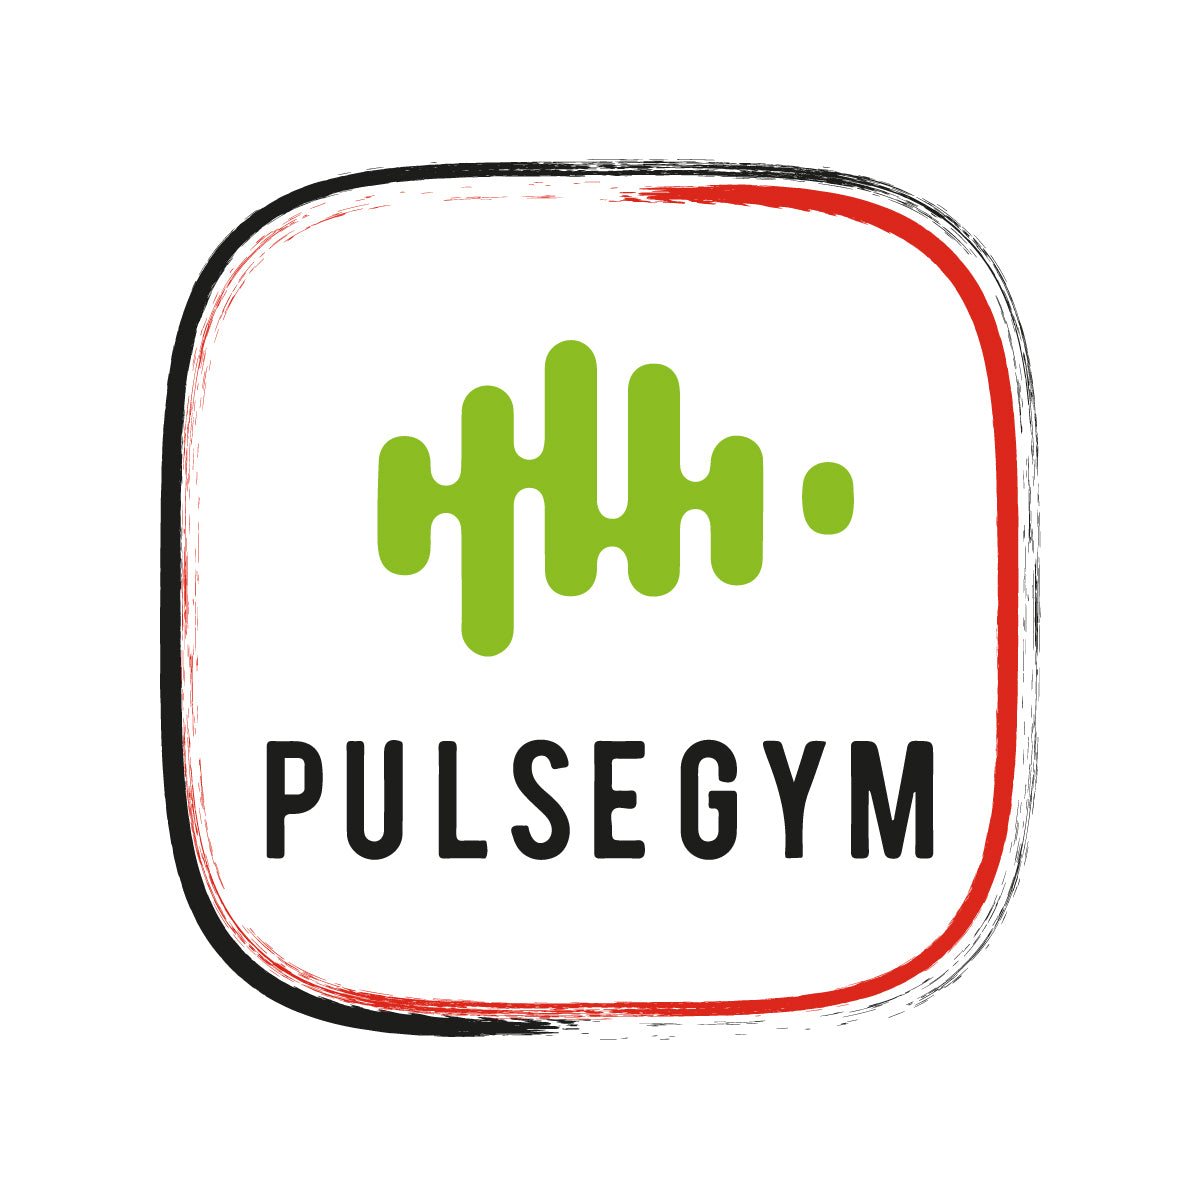 Pulse Gym